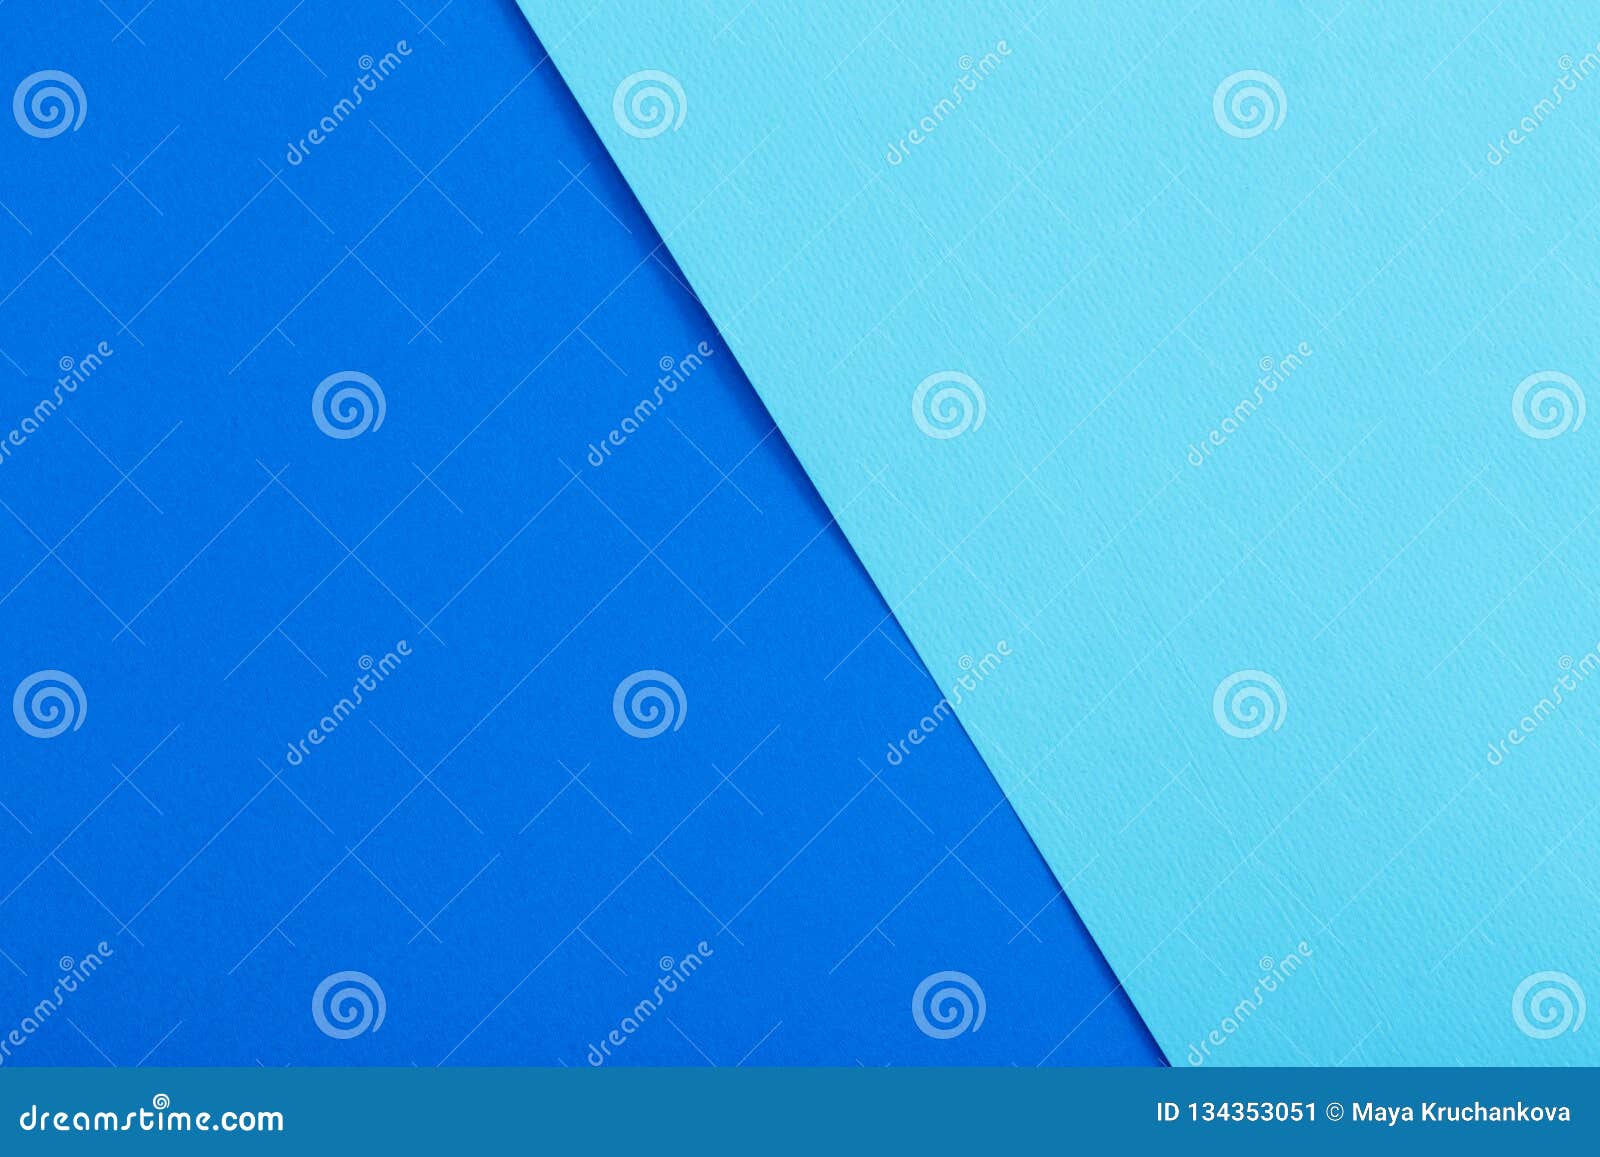 Crumpled blue Construction Paper Background - Meridian Tech